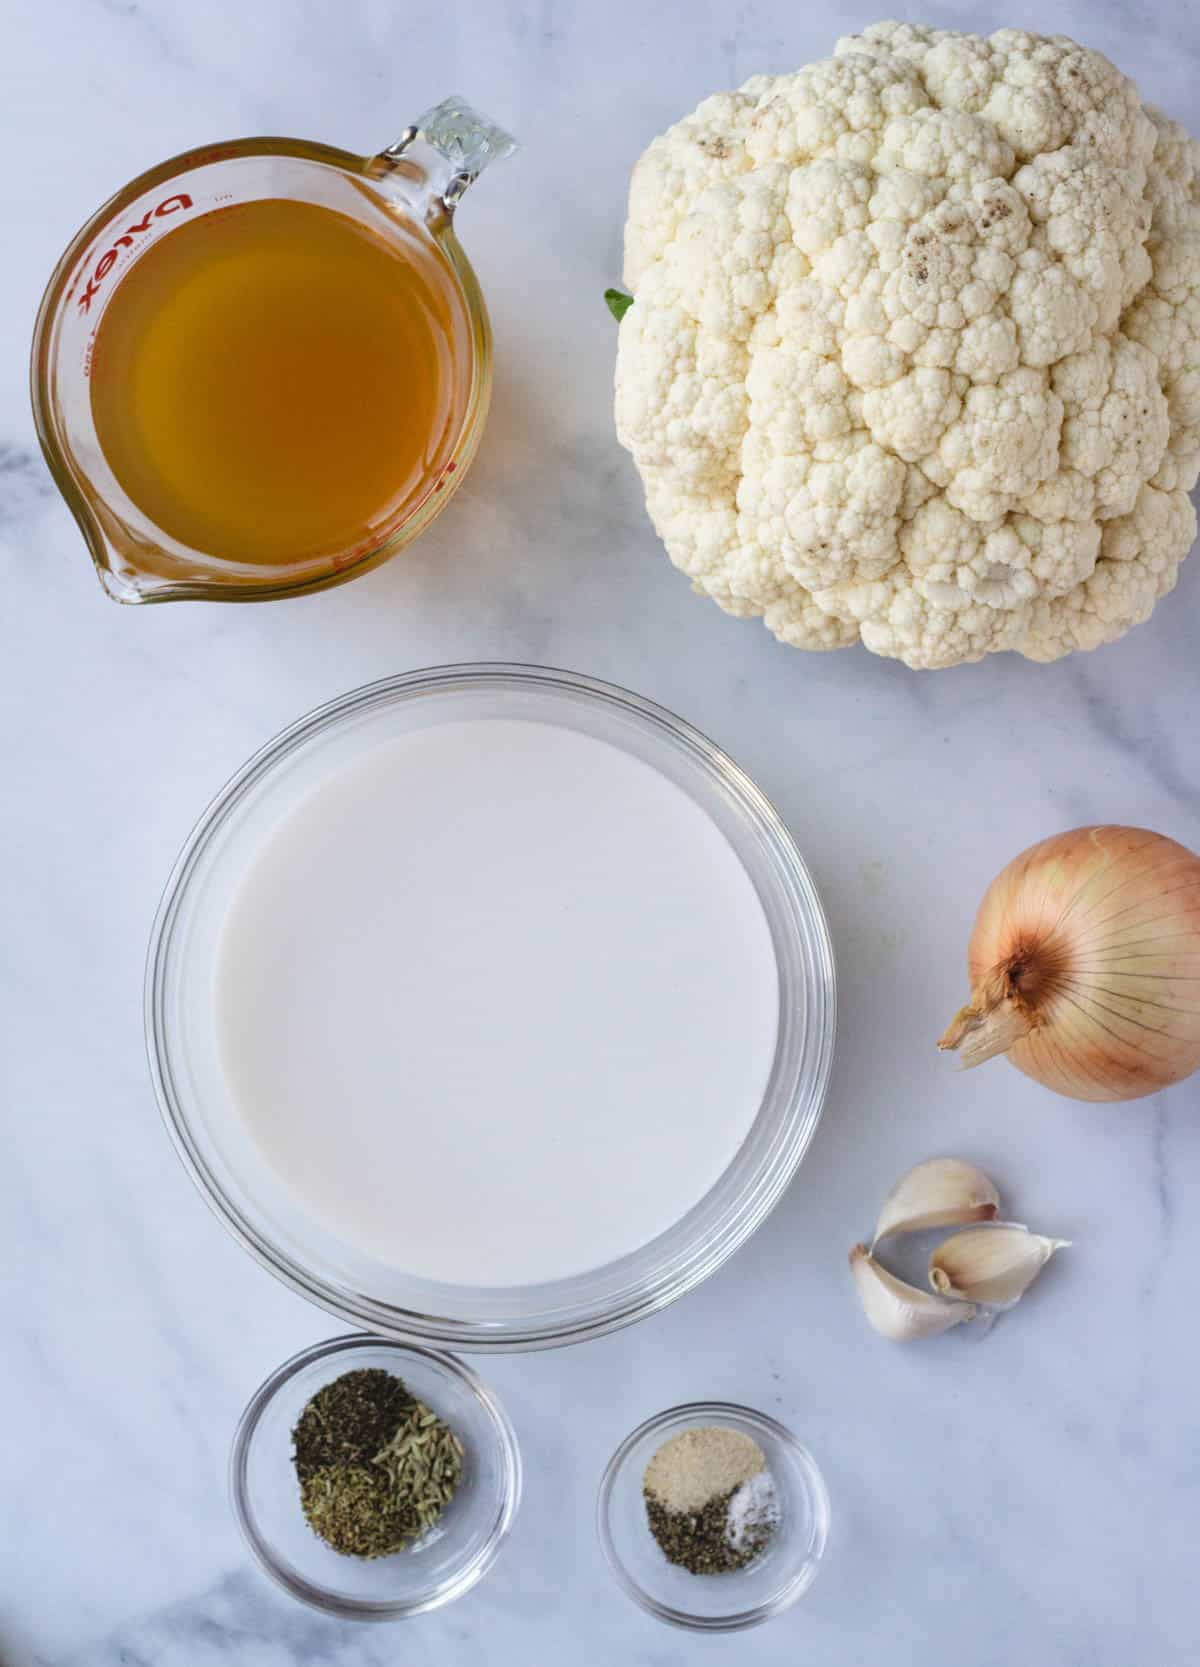 Cauliflower soup ingredients: head of cauliflower, vegetable stock, onion, garlic, coconut milk, herbs and spices.

